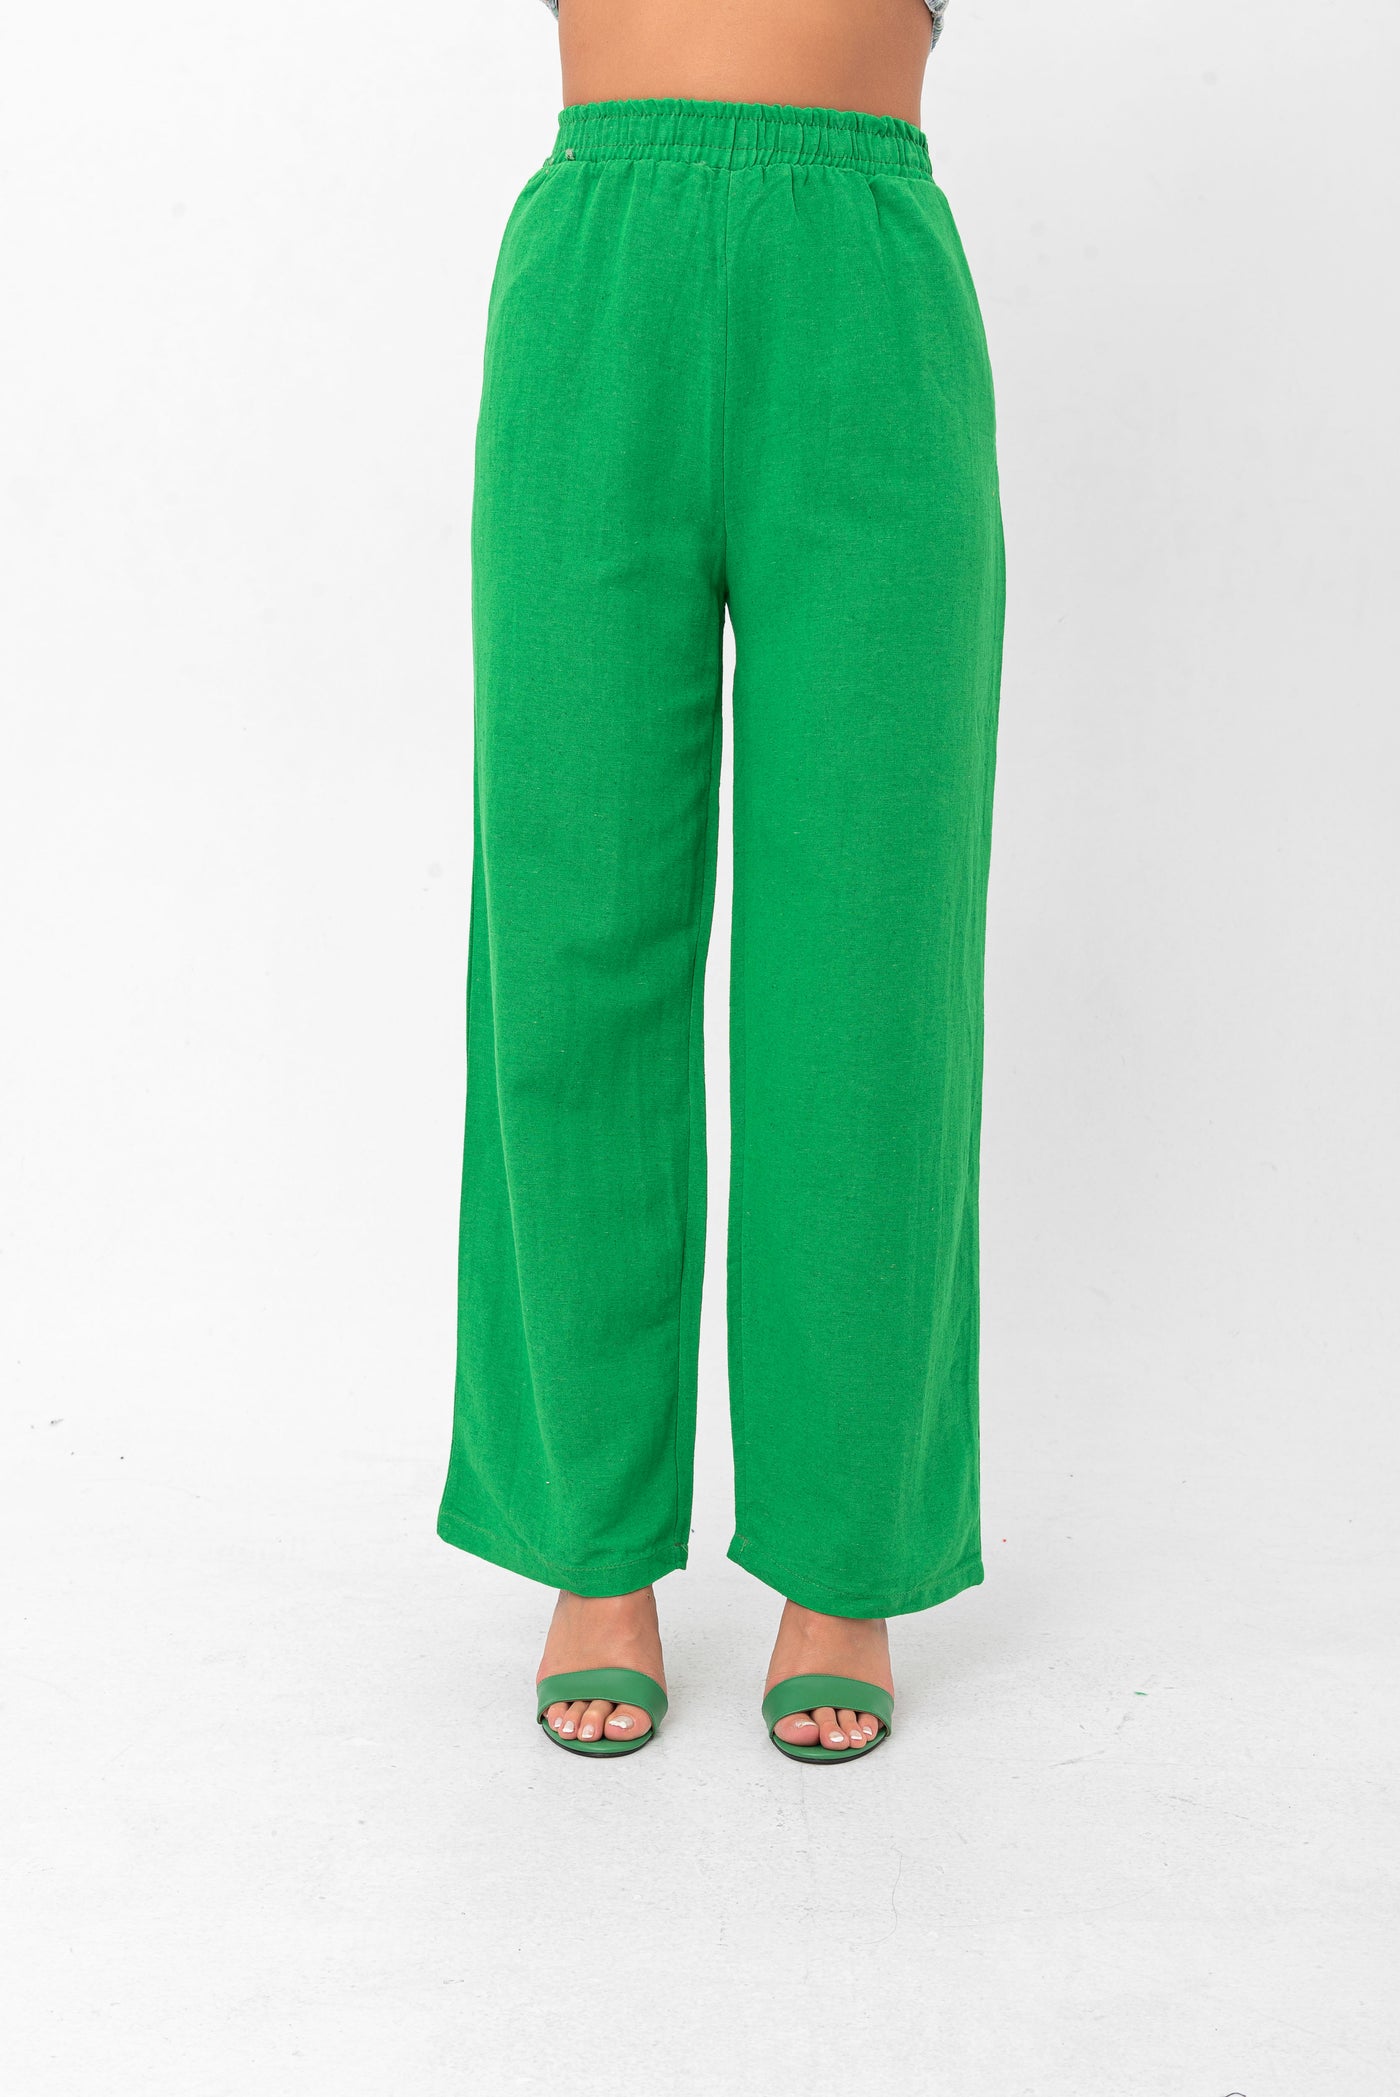 Roxy Casual Lounge Pants - Green